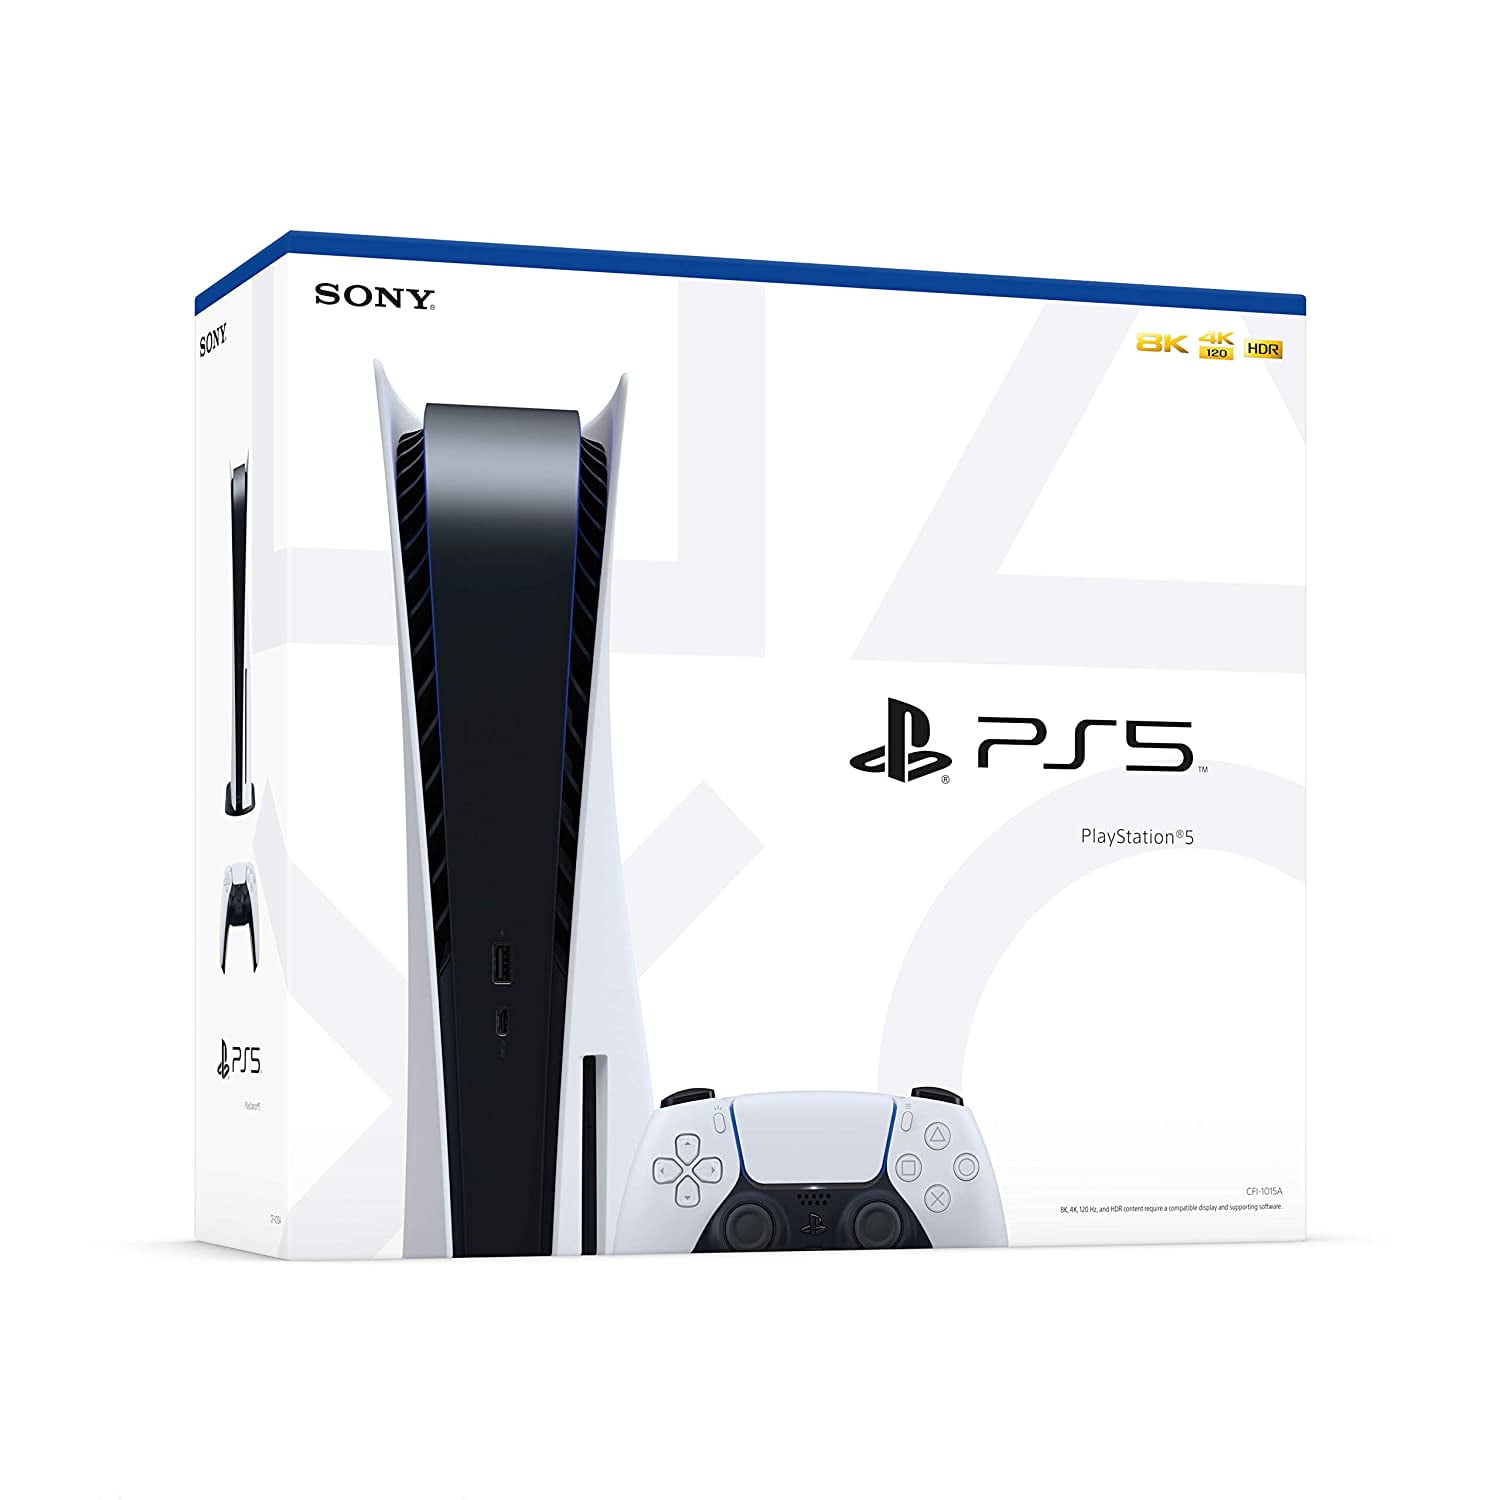 Playstation 5 (Digital) + Fifa 23 + Fortnite + Accessories